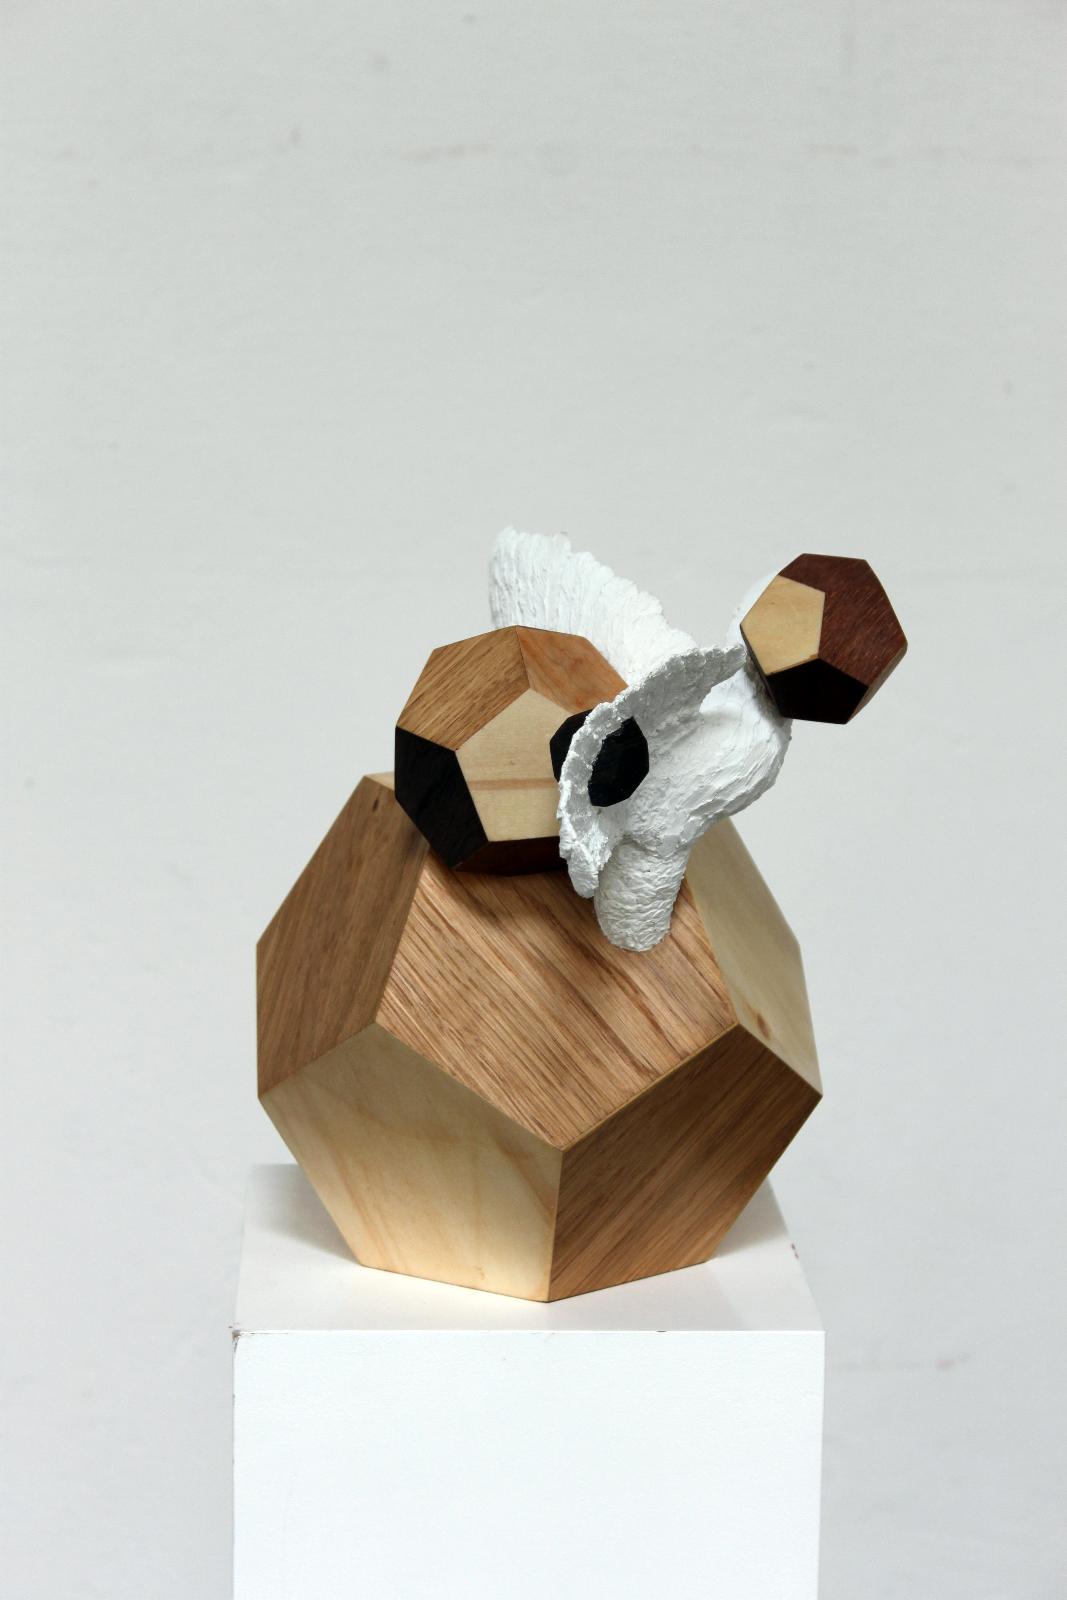 Gregor Gaida, Membran Nektarvogel, 2013 , Kunstharz, Holz, 20 cm x 32 cm x 30 cm, verkauft!, Galerie Cyprian Brenner